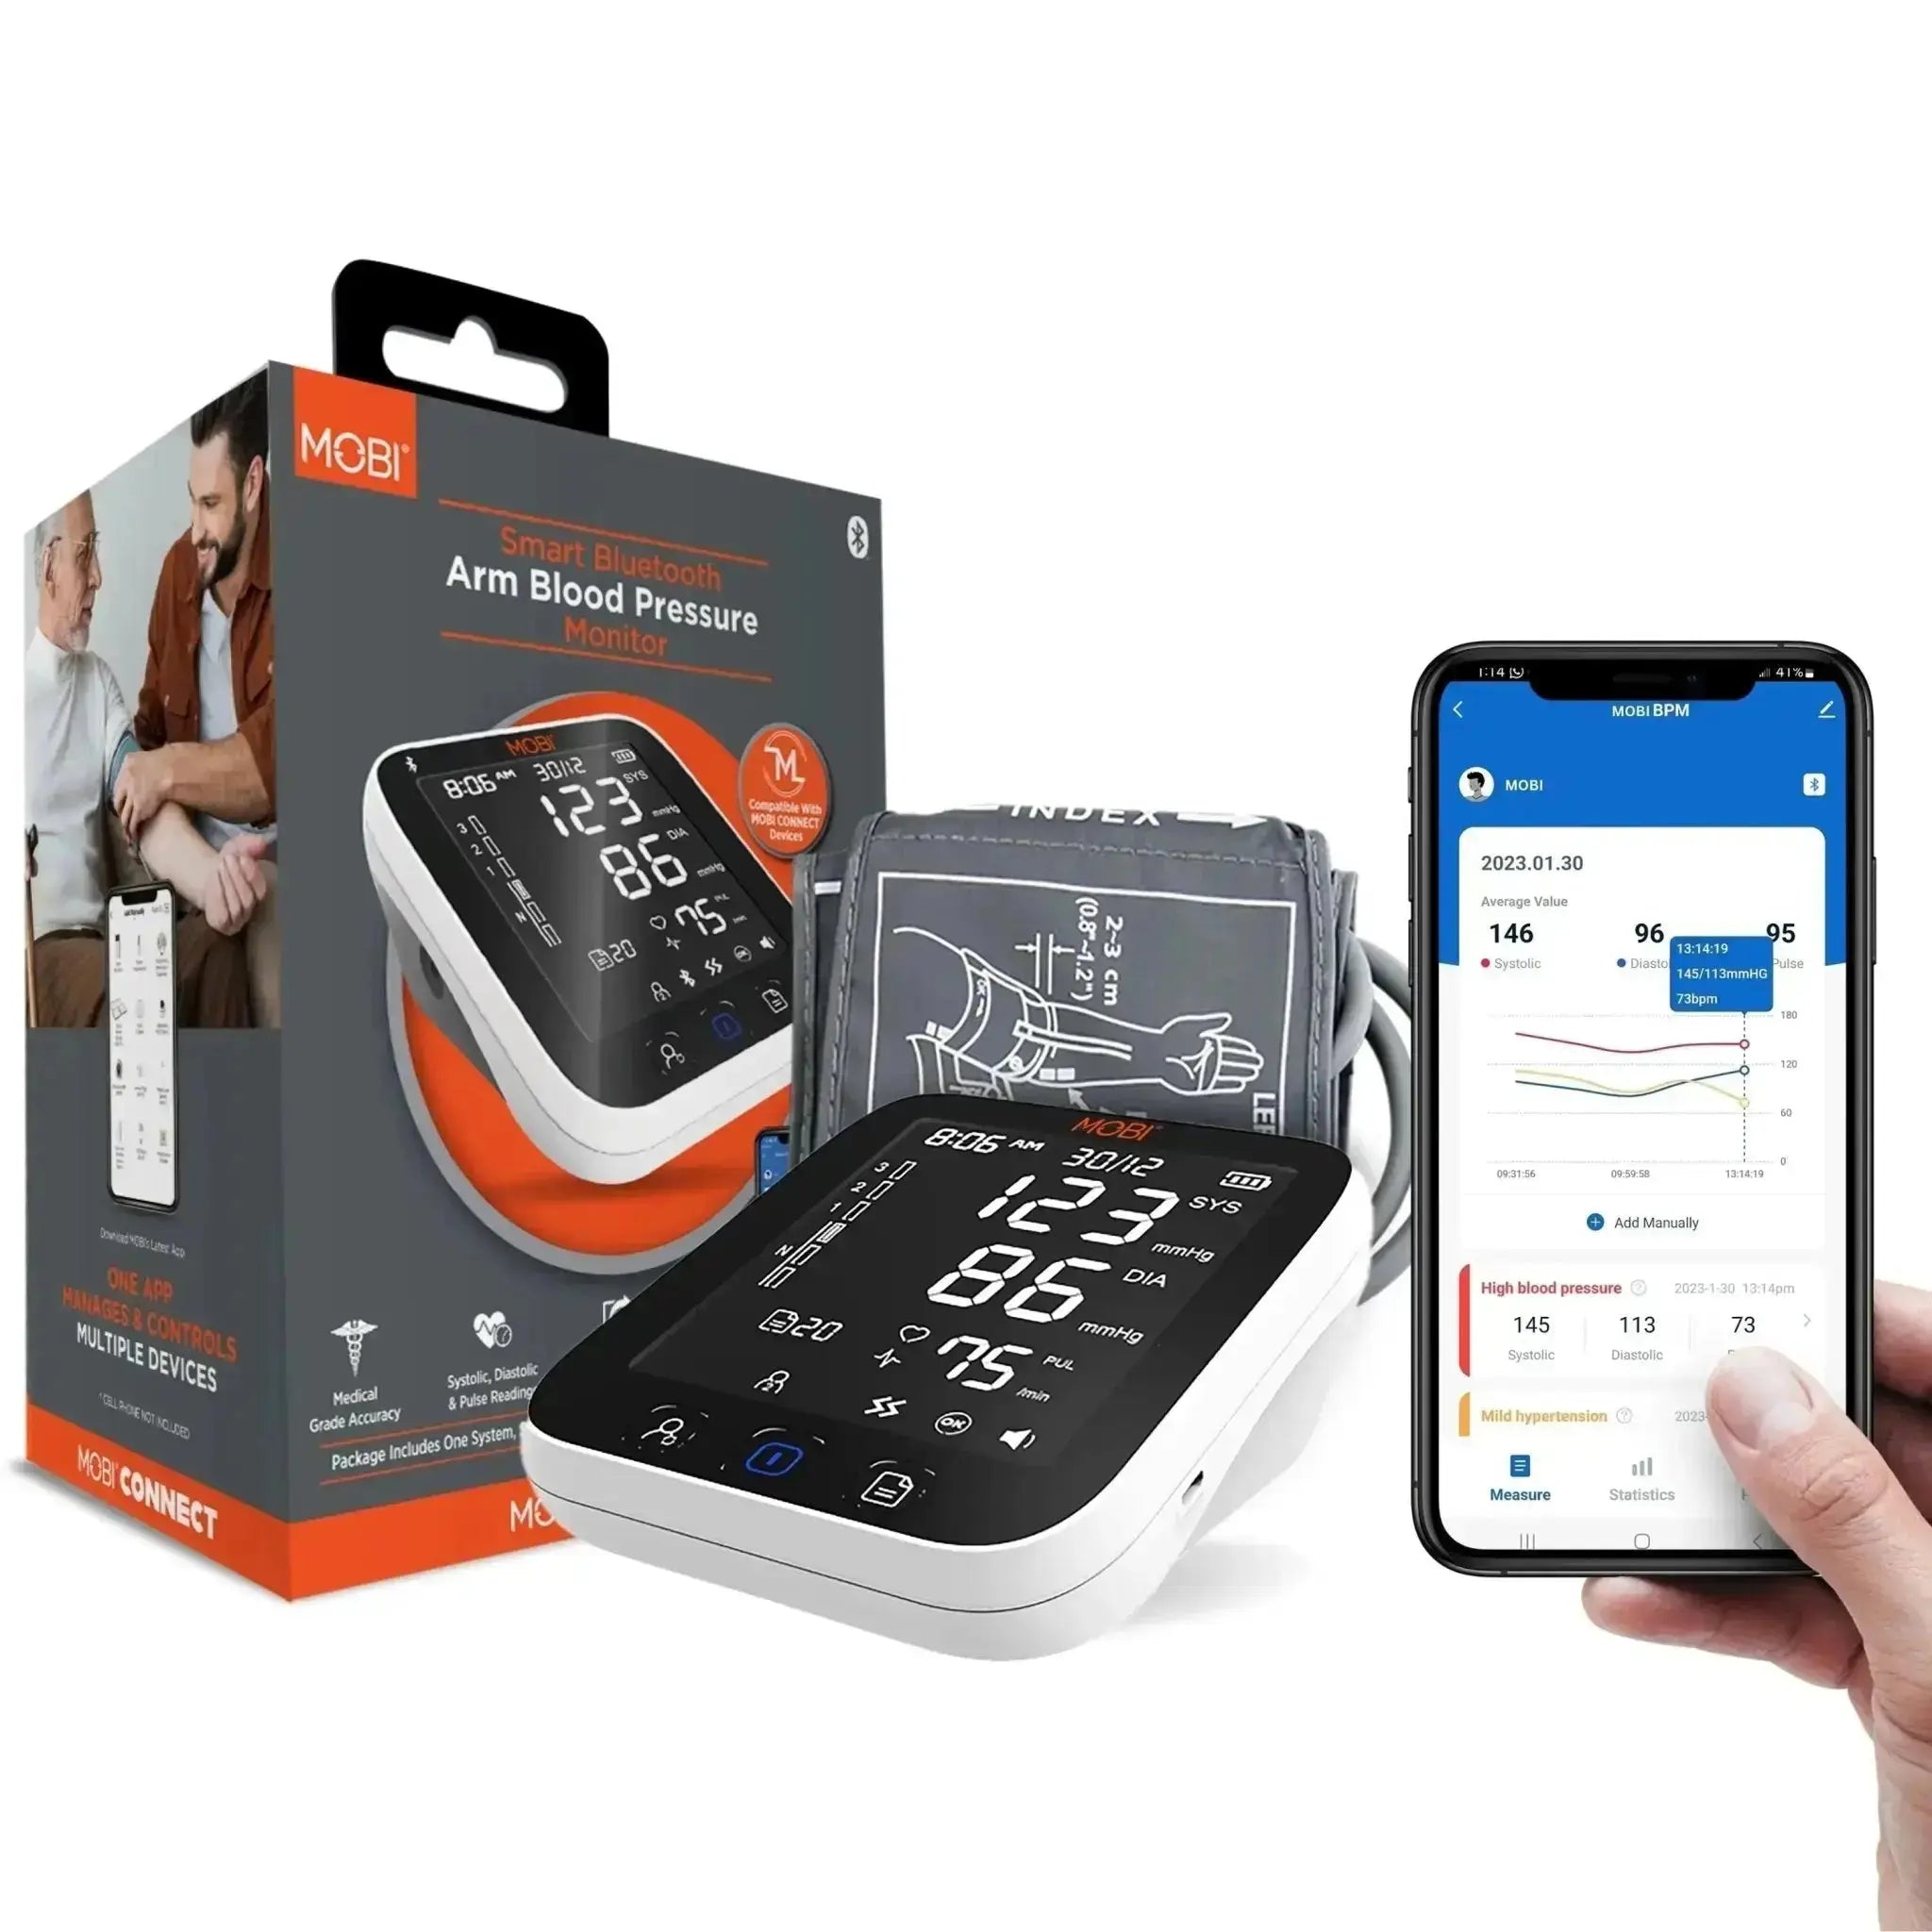 MOBI Home Clinic - Wi-Fi Otoscope, Bluetooth Blood Pressure Monitor, Oximeter & DualScan Thermometer Bundle - MOBI USA